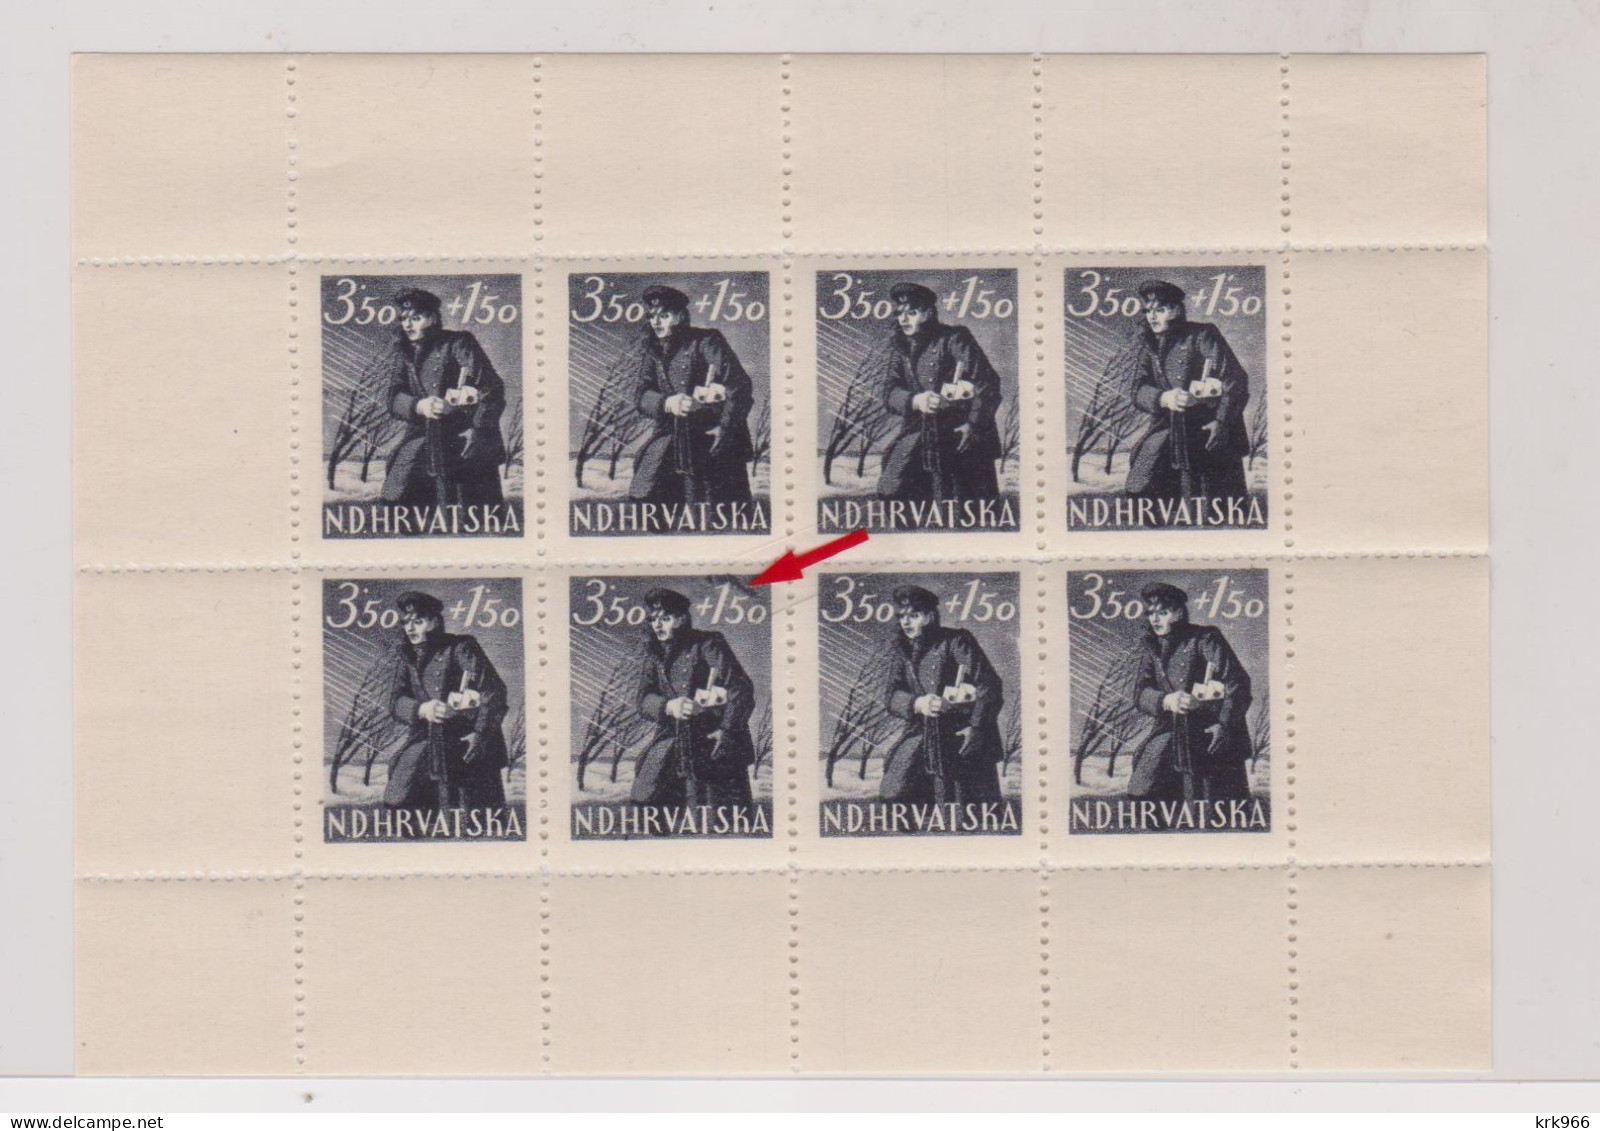 CROATIA, WW II  1945 Postman  Sheet Plate Error  ,MNH - Croacia